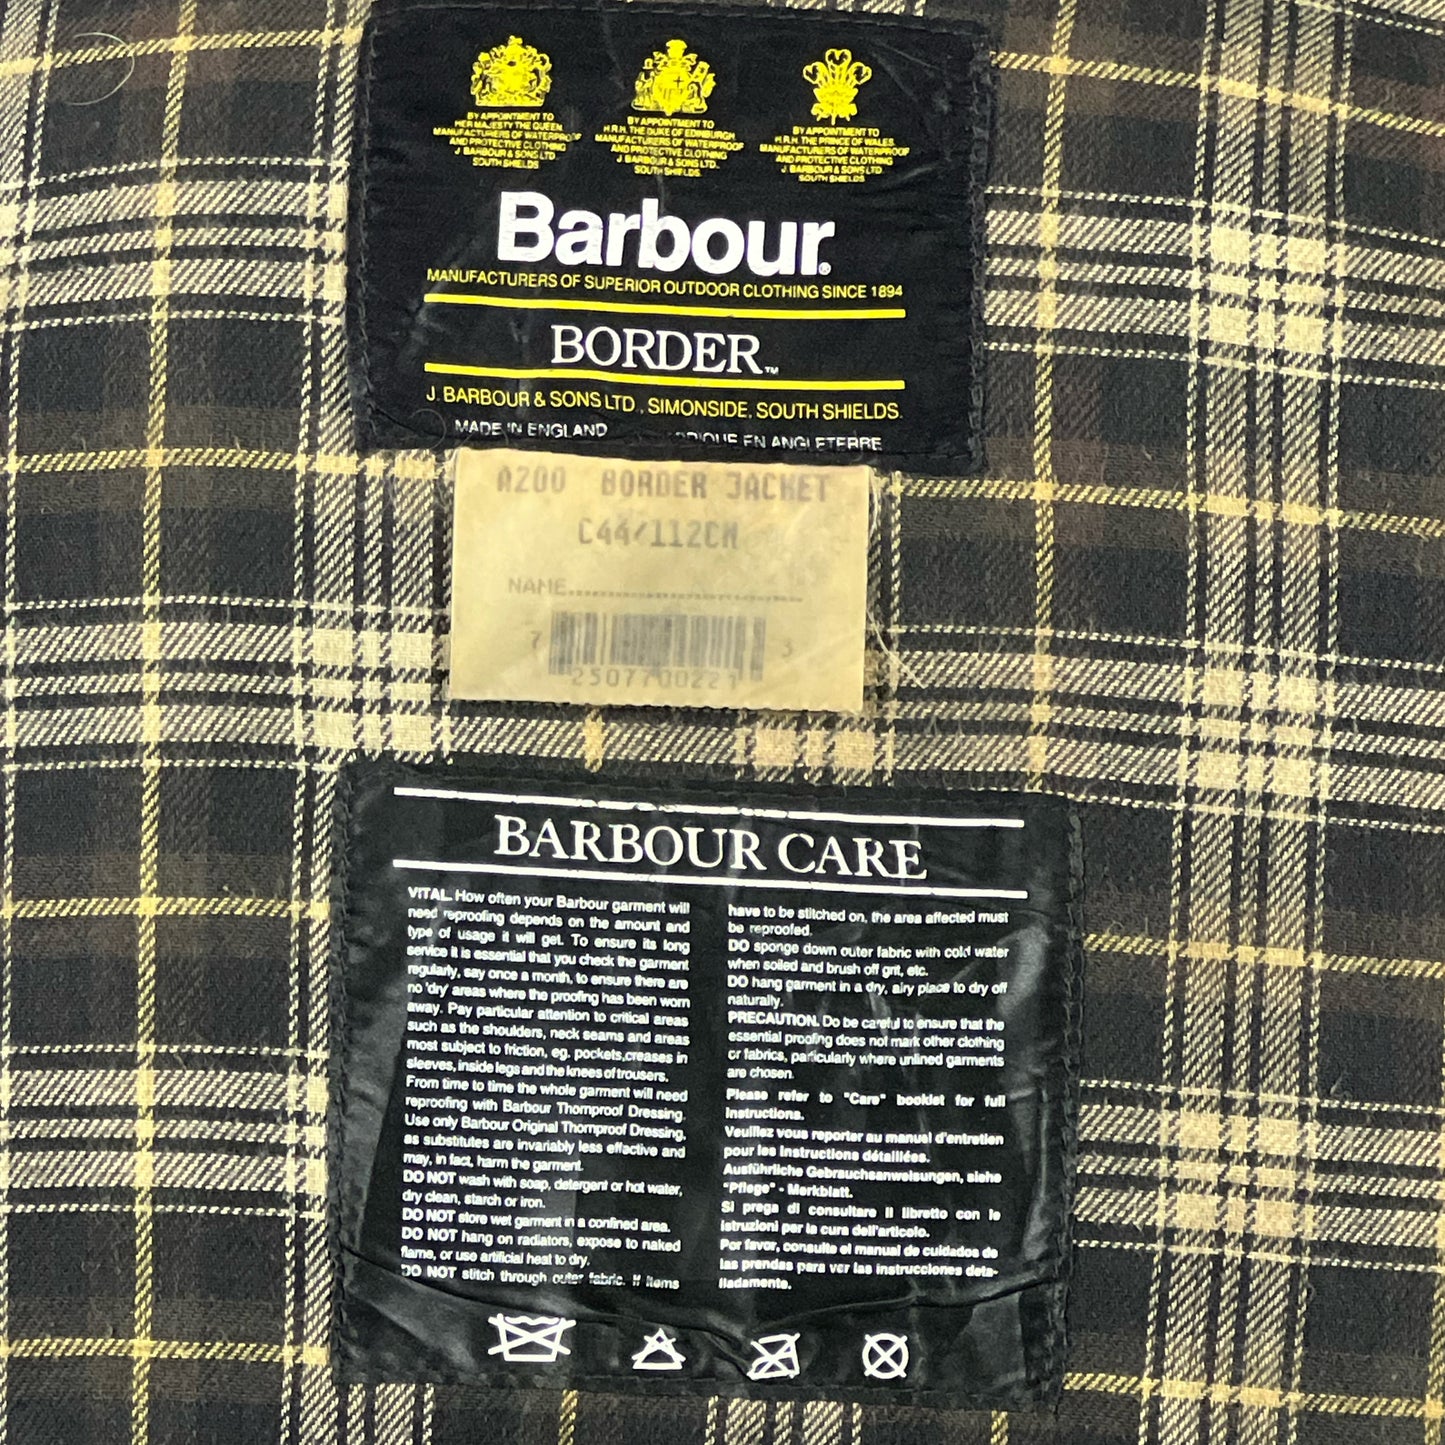 Barbour Border verde cotone Cerato C44/112 cm Green Border Coat Size Large tg. 54 ita